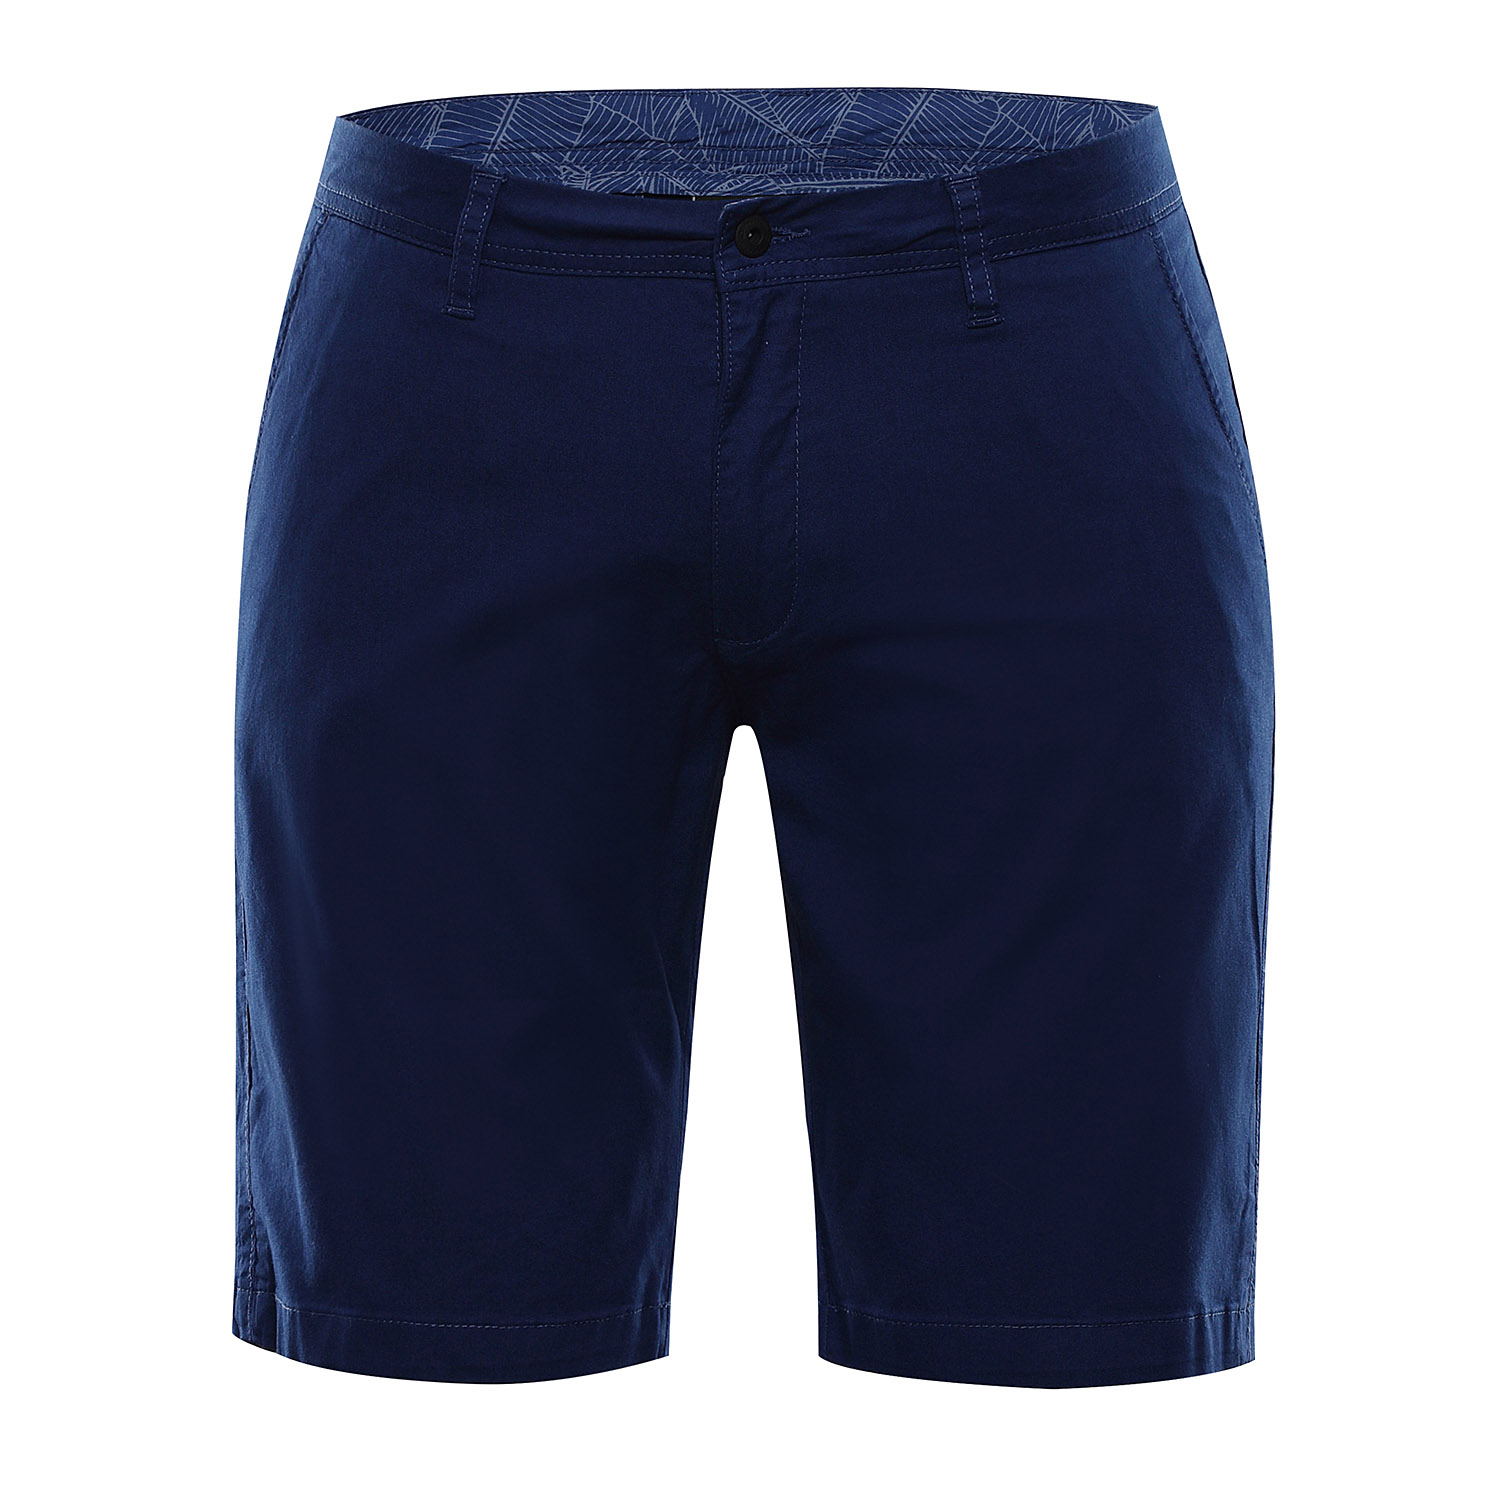 Women's shorts ALPINE PRO MACRA estate blue